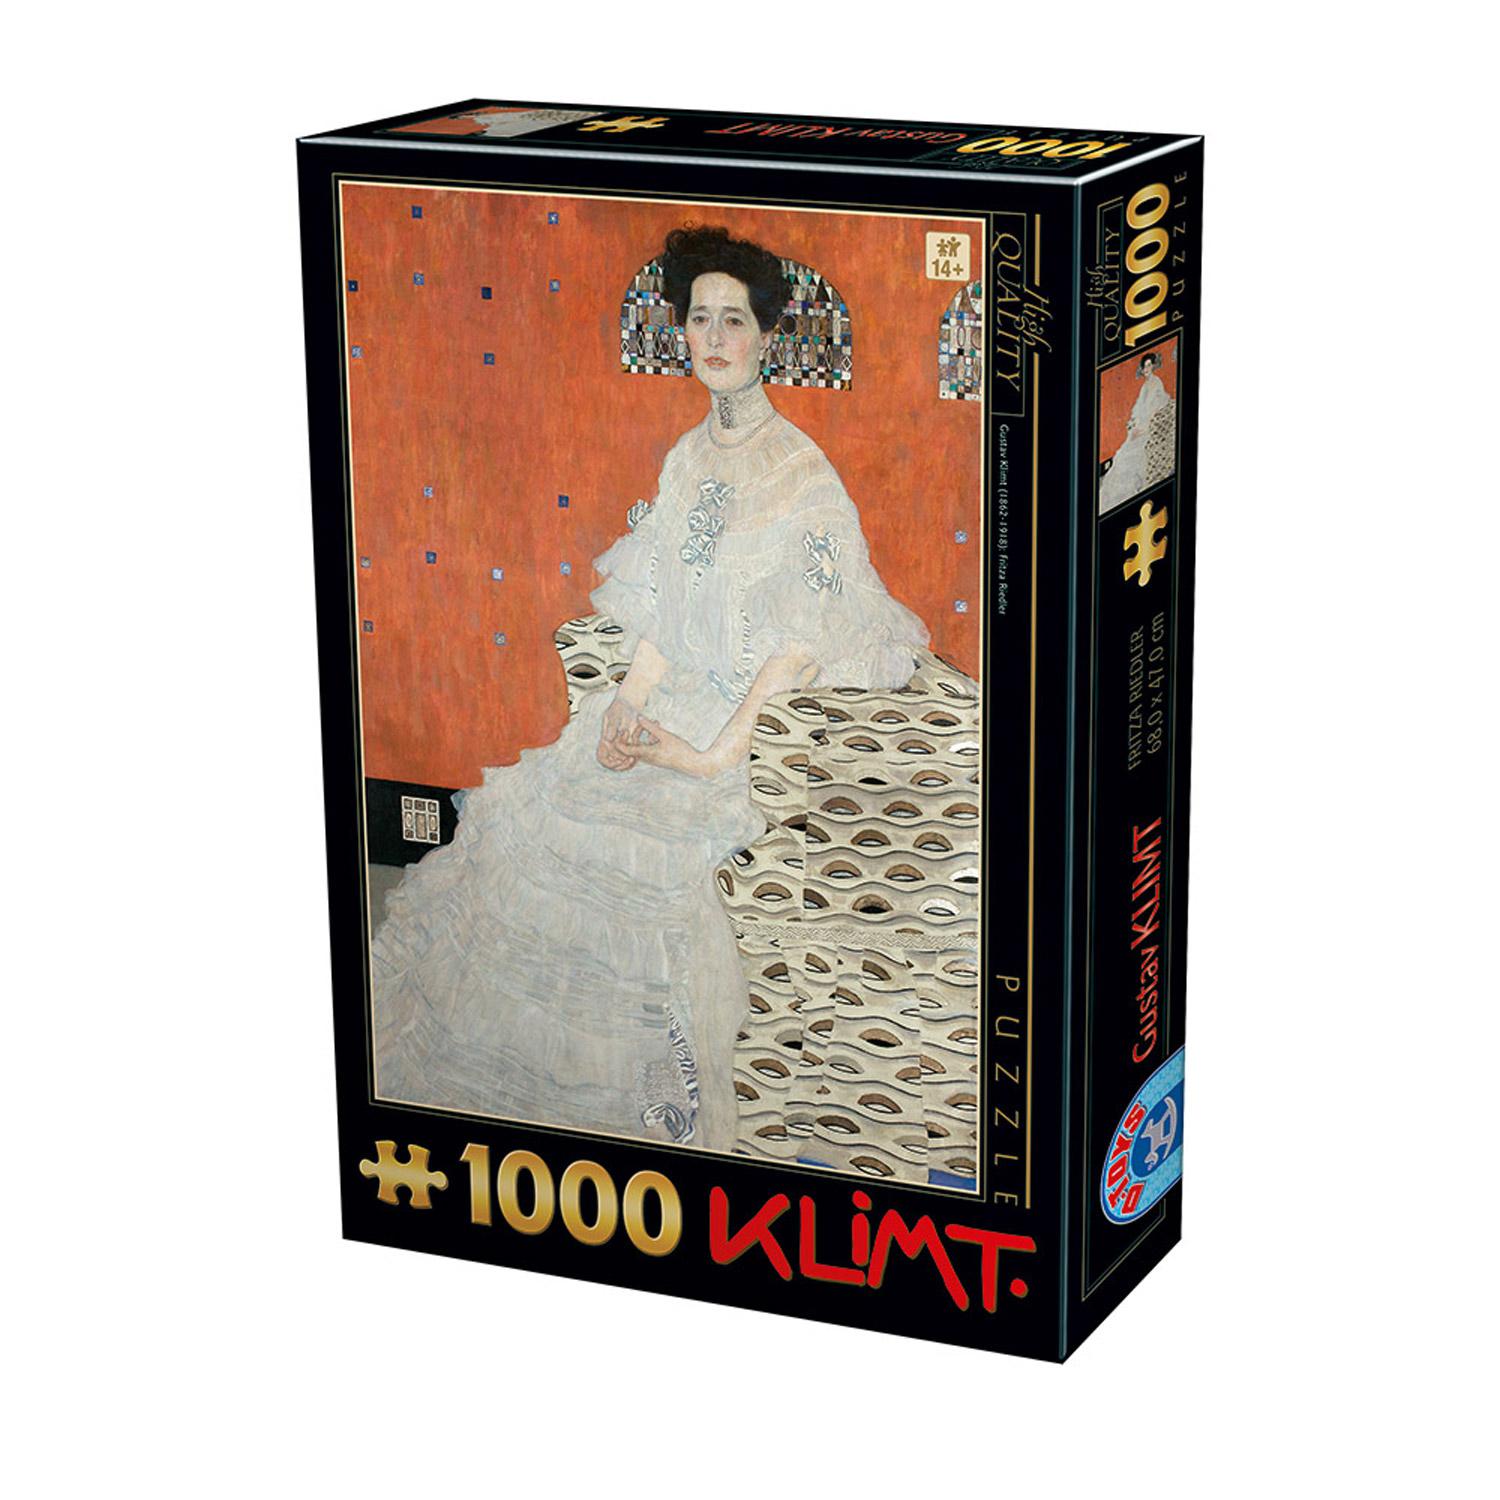 Puzzle 1000 pièces : Fritza Riedler, Gustav Klimt